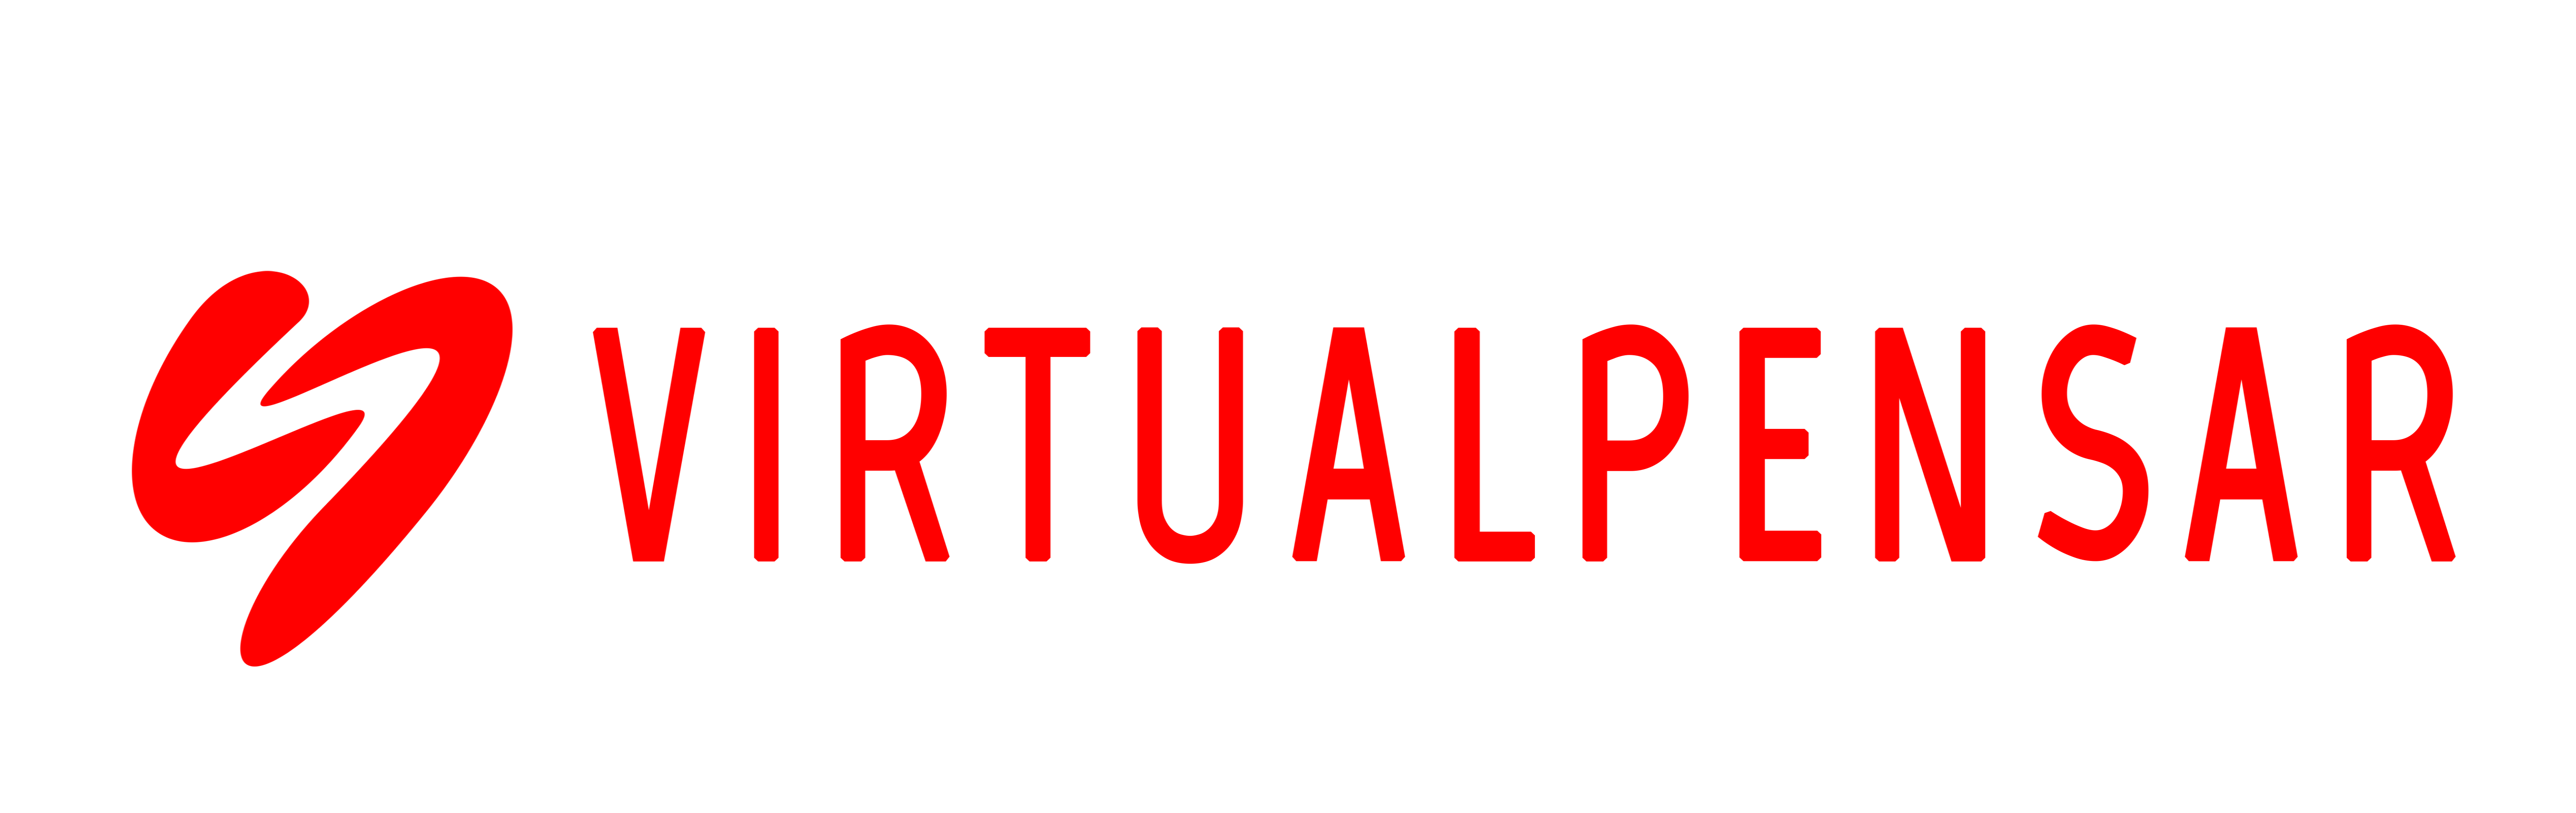 Virtualpensar Pvt Ltd